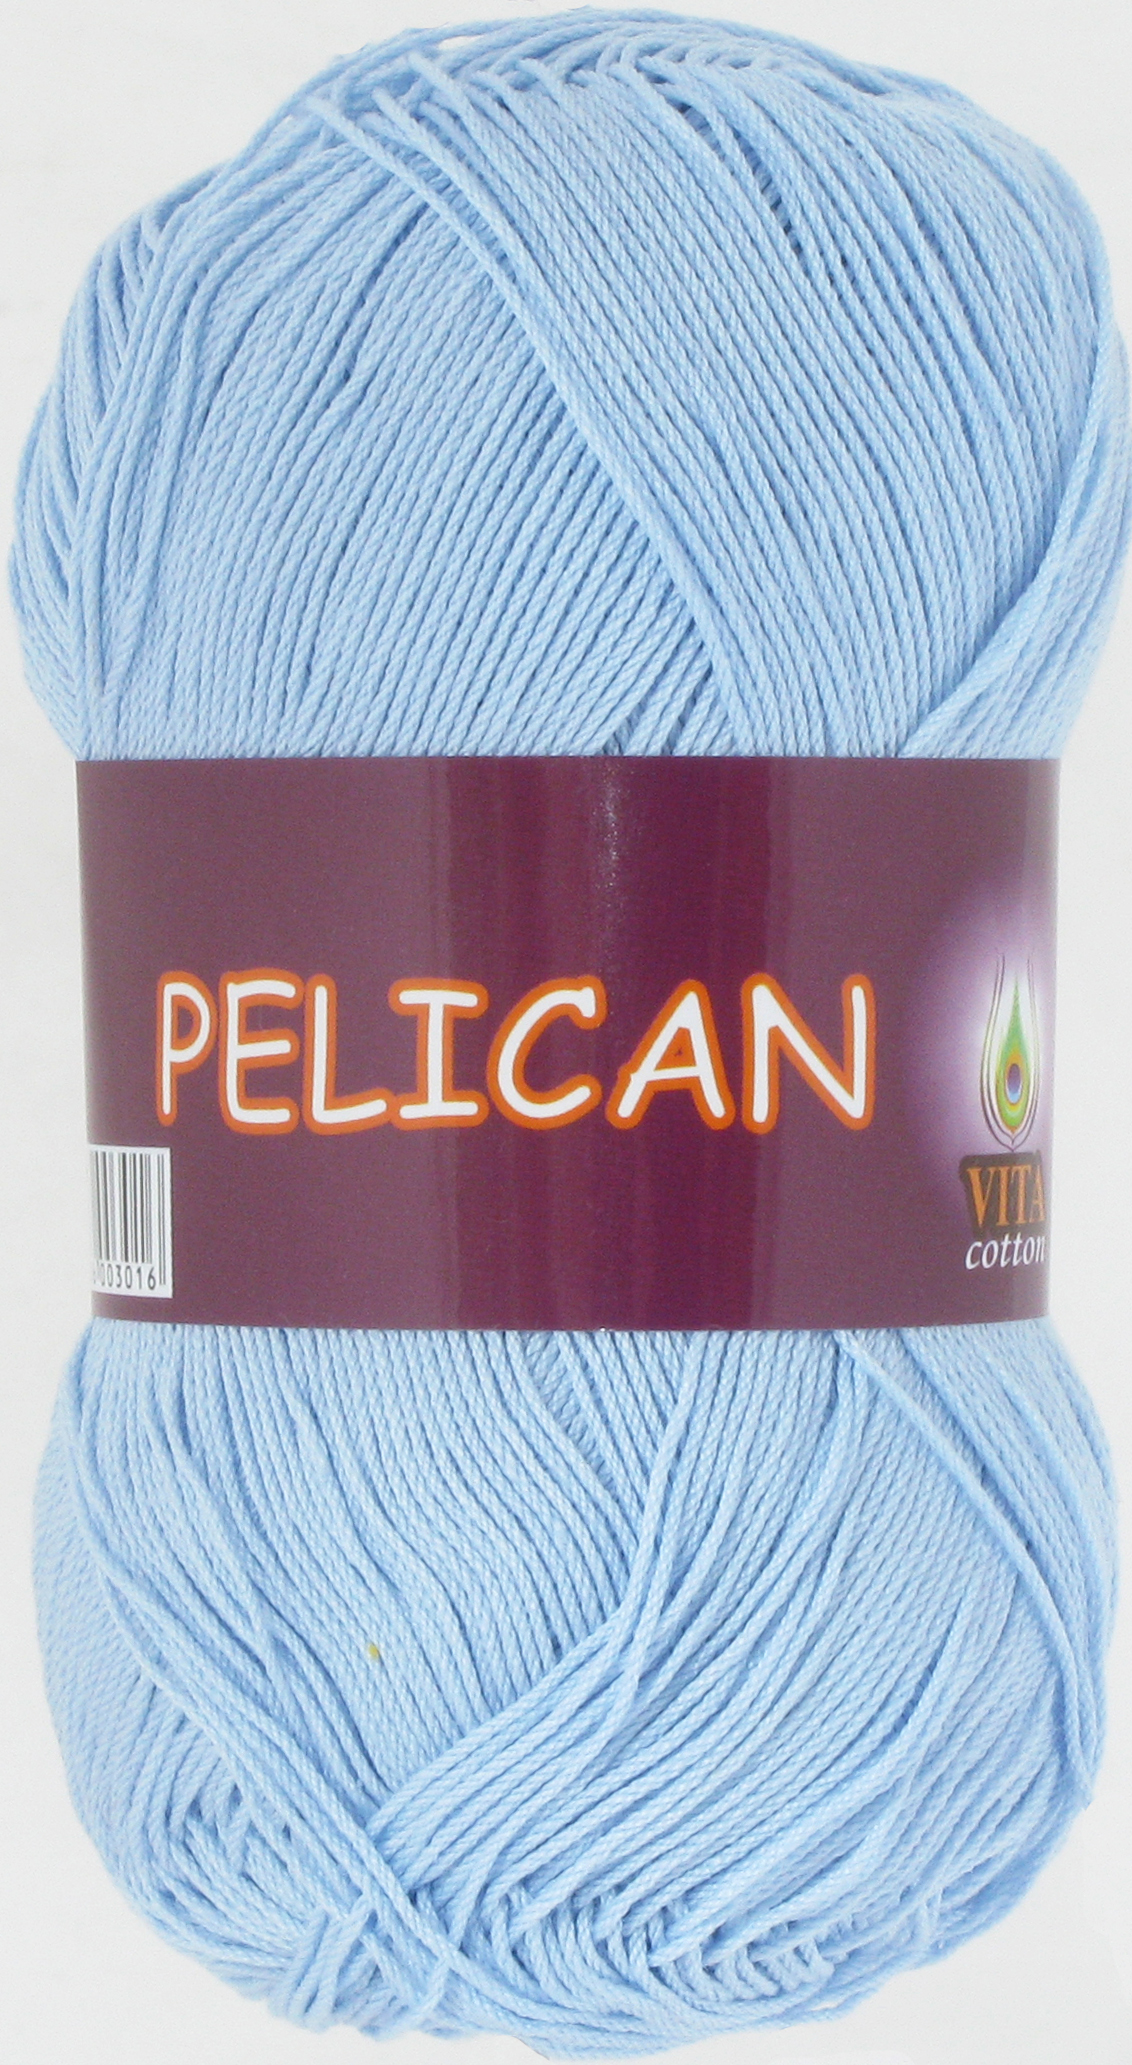 Pelican 4012 голубой*